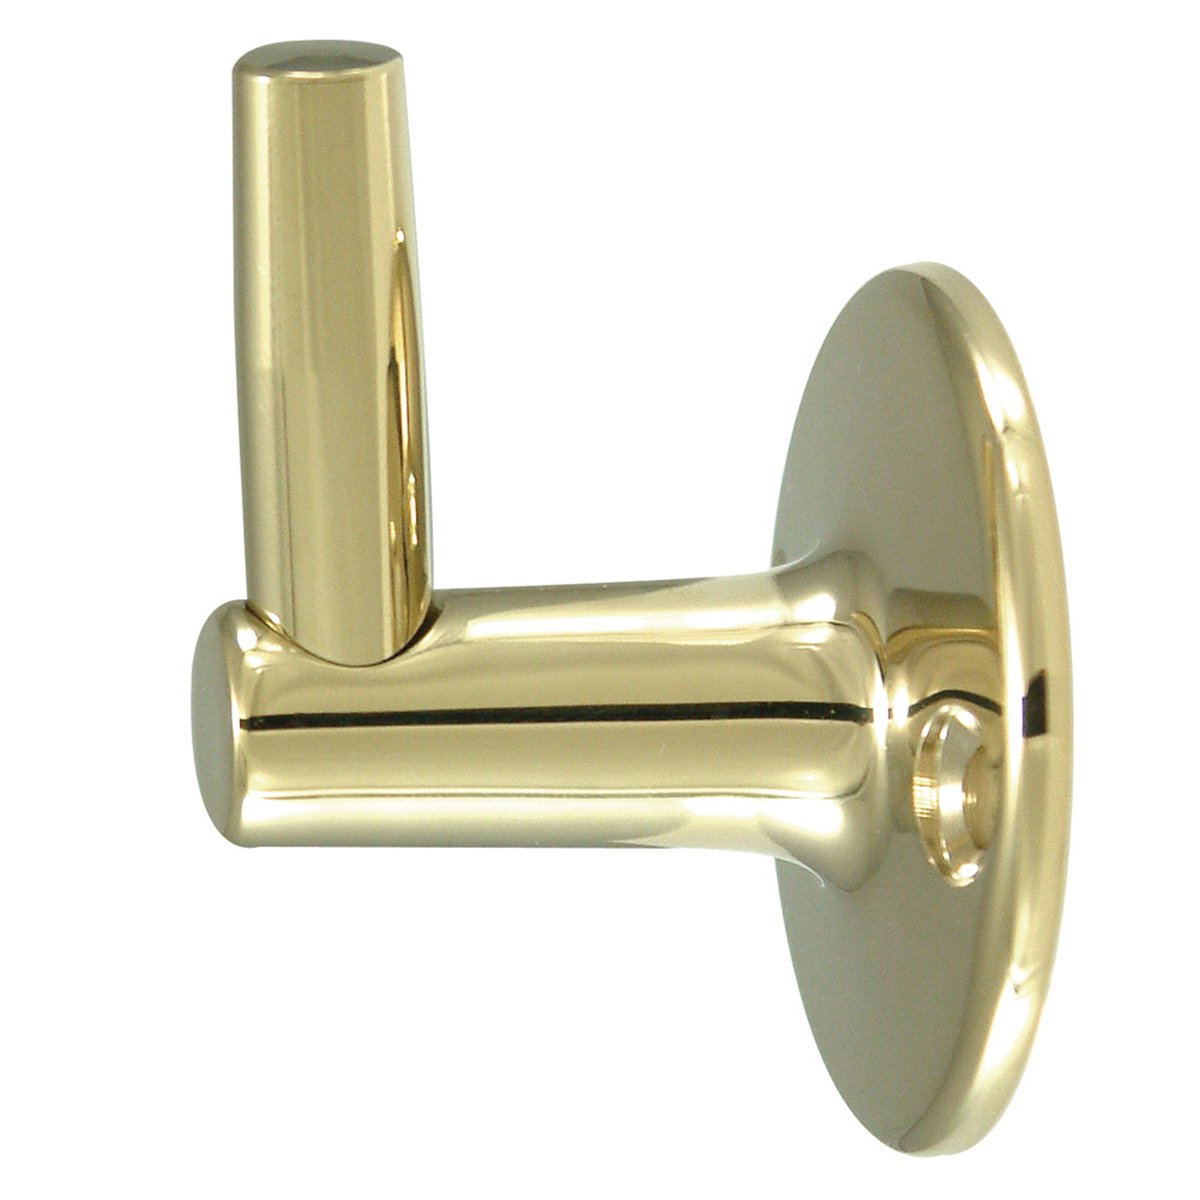 Kingston Brass Plumbing Parts Pin Wall Bracket-Bathroom Accessories-Free Shipping-Directsinks.